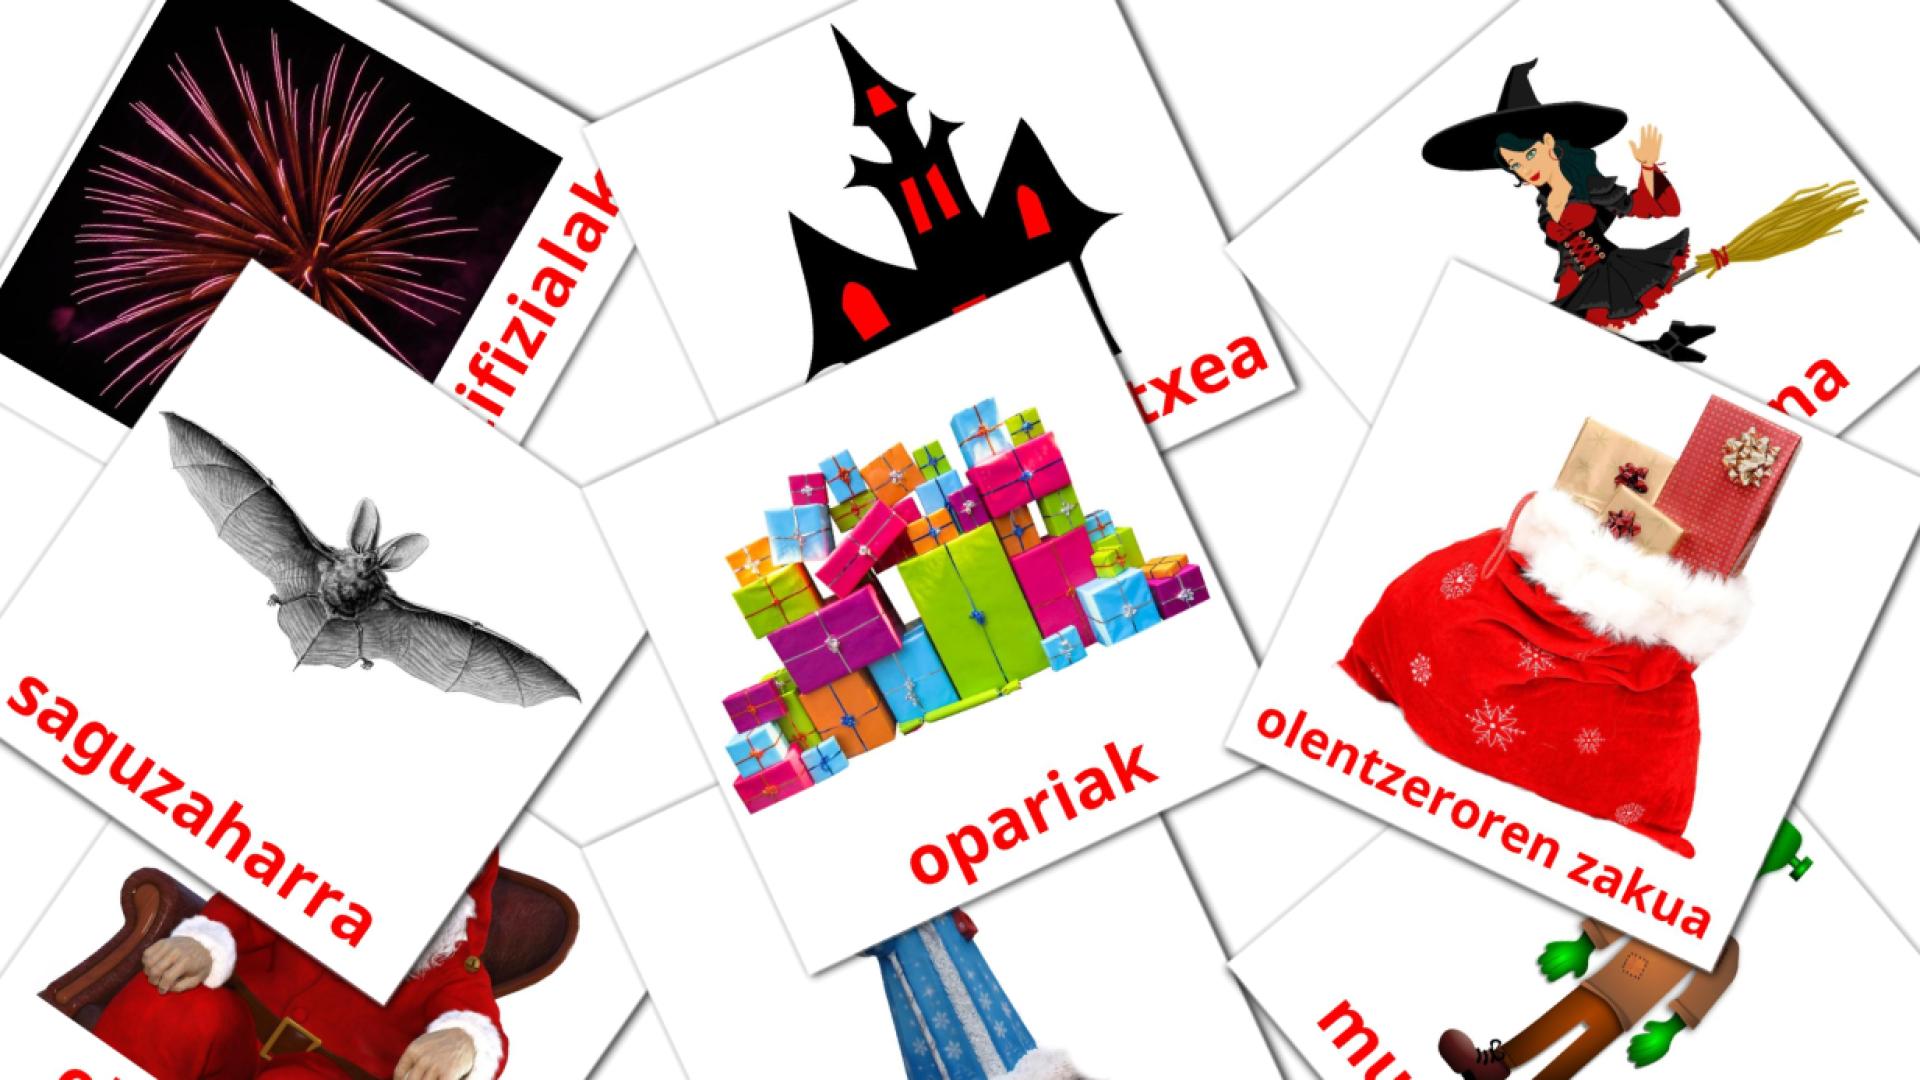 16 Oporrak flashcards